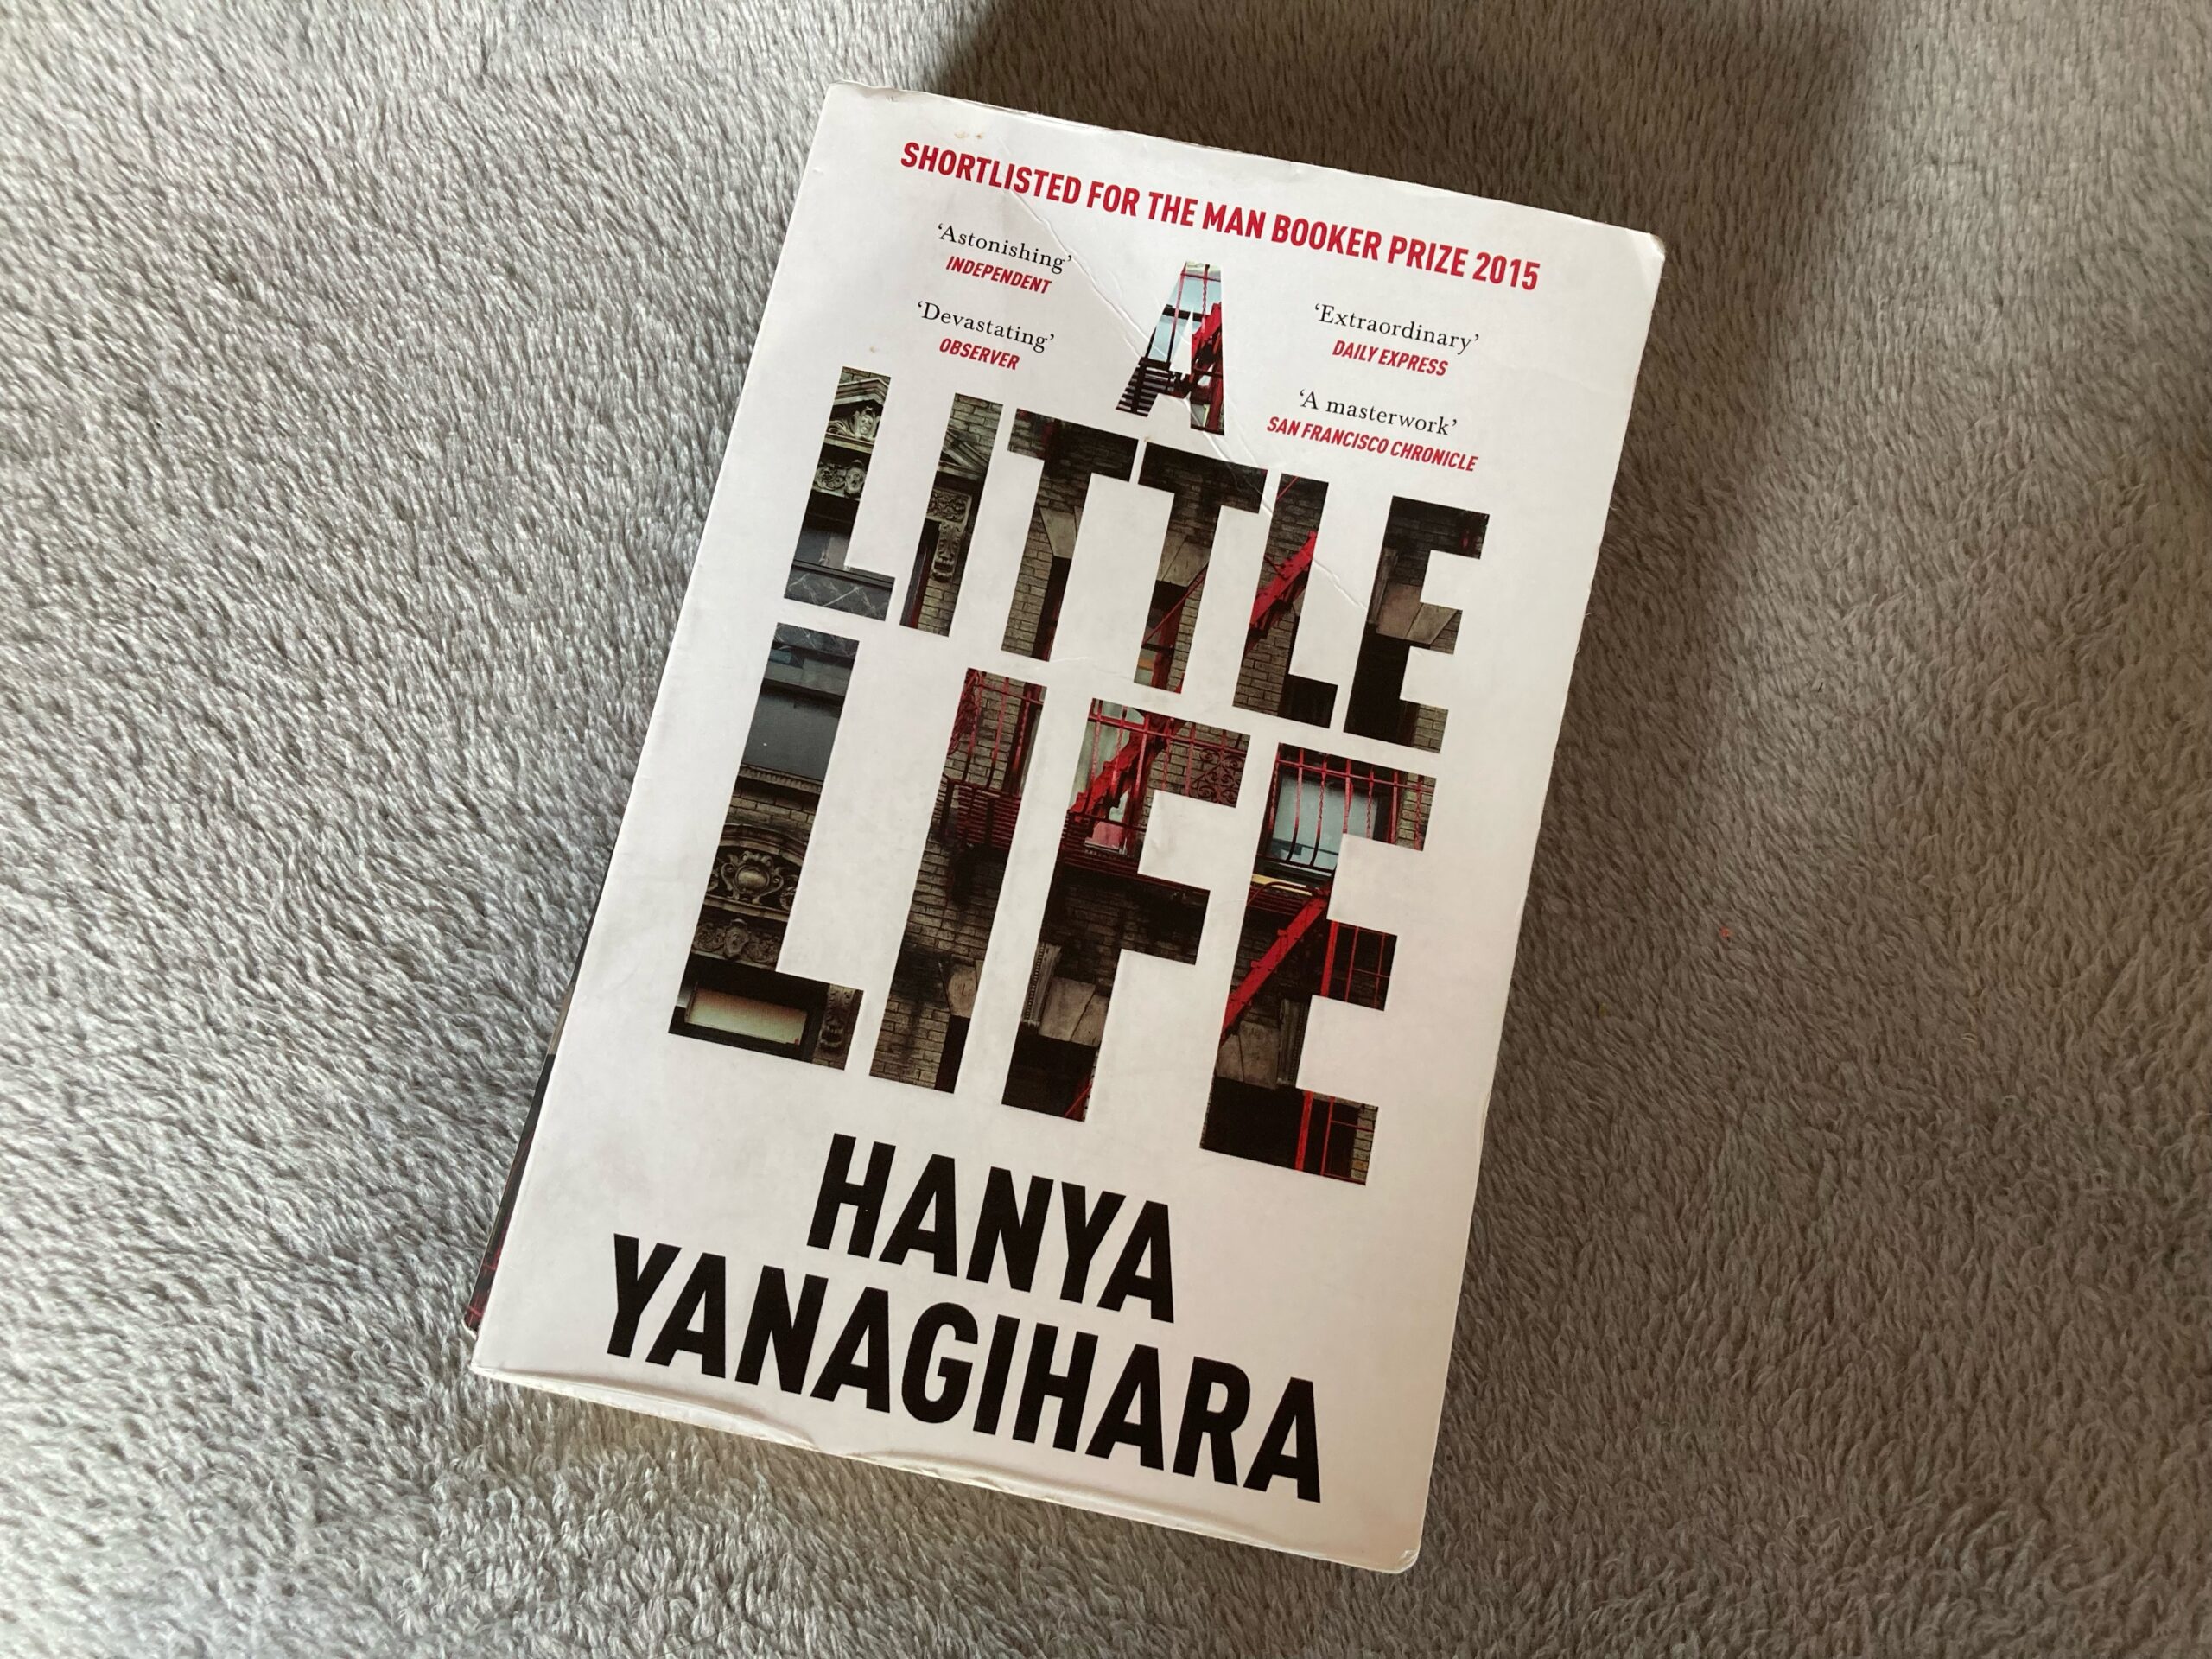 A Little Life by Hanya Yanagihara. Book Cover Art Print